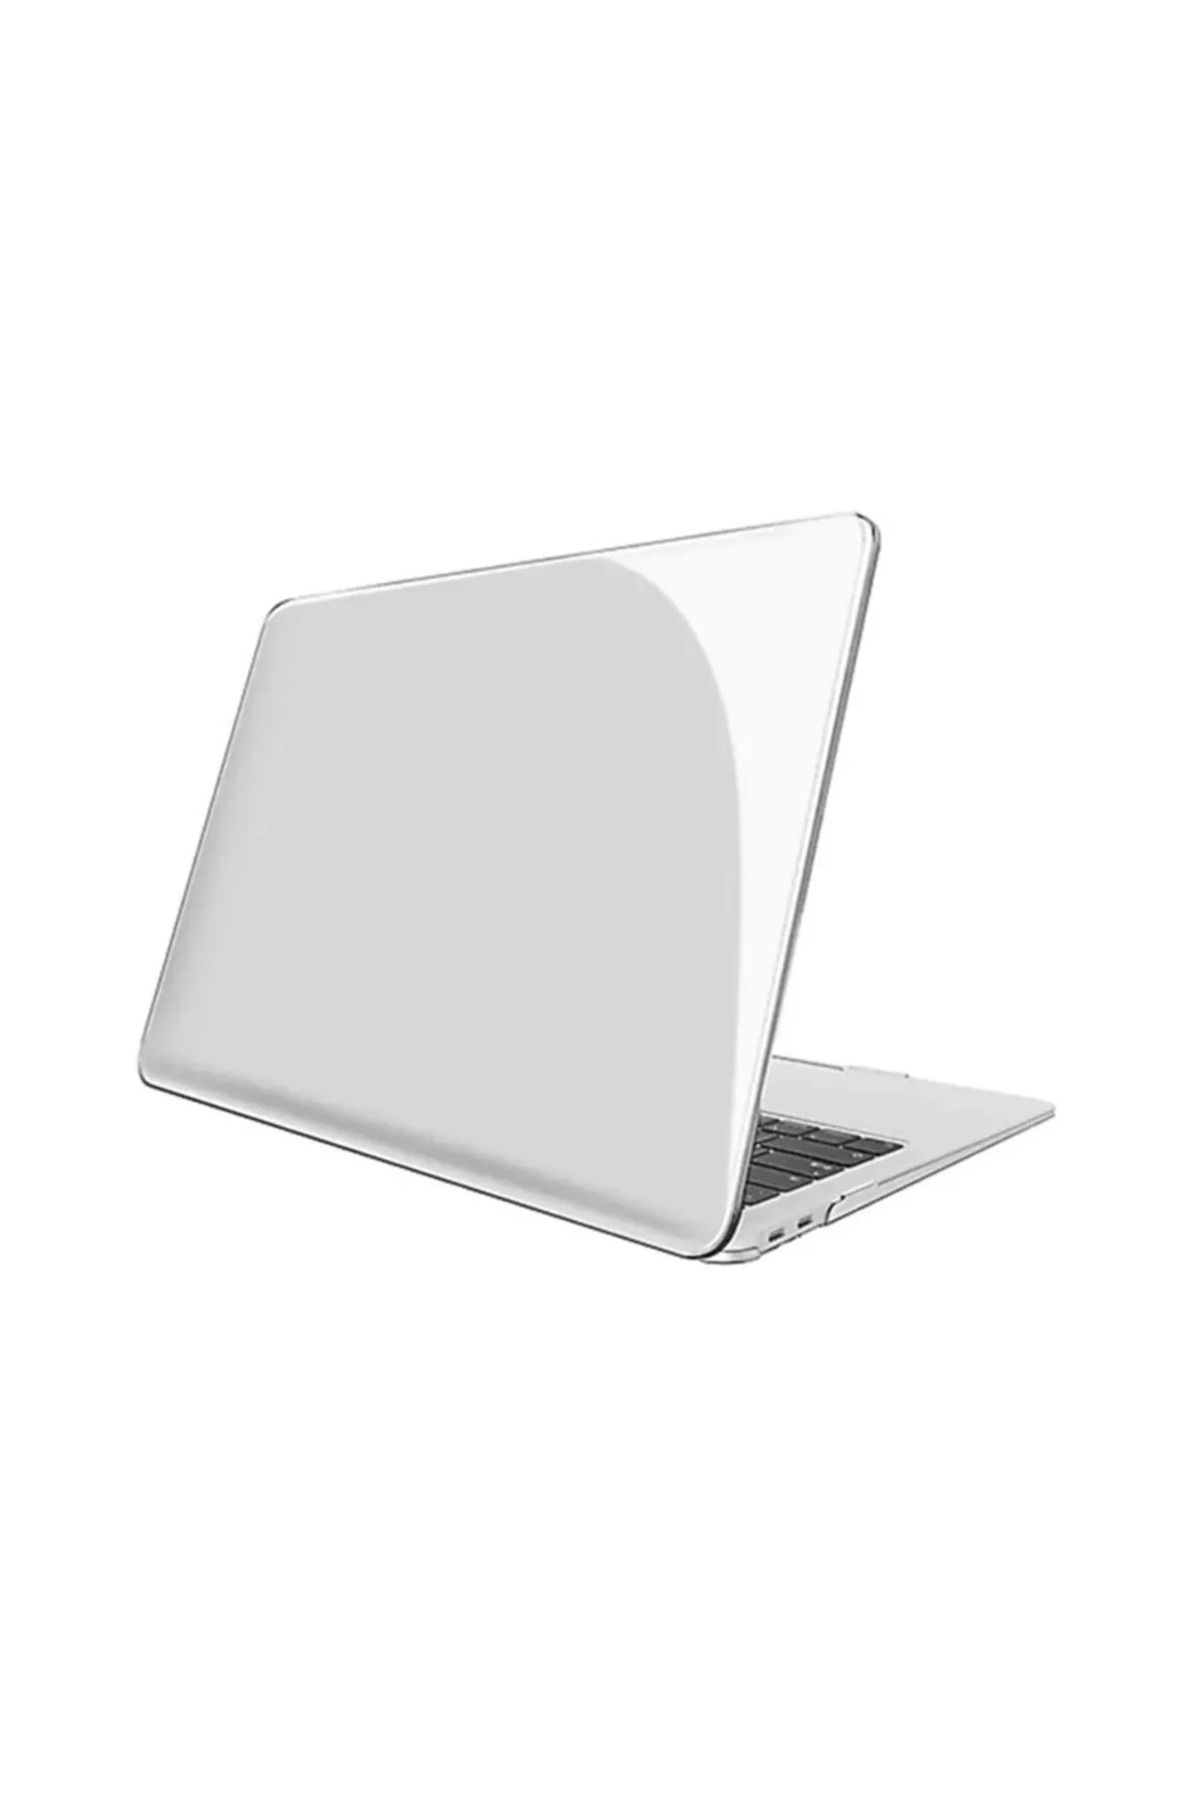 Fibaks Apple Macbook Air 13.3 M1 2020 Kılıf A1932 - A2174 - A2337 Şeffaf Transparan Koruyucu Kapak Kılıf